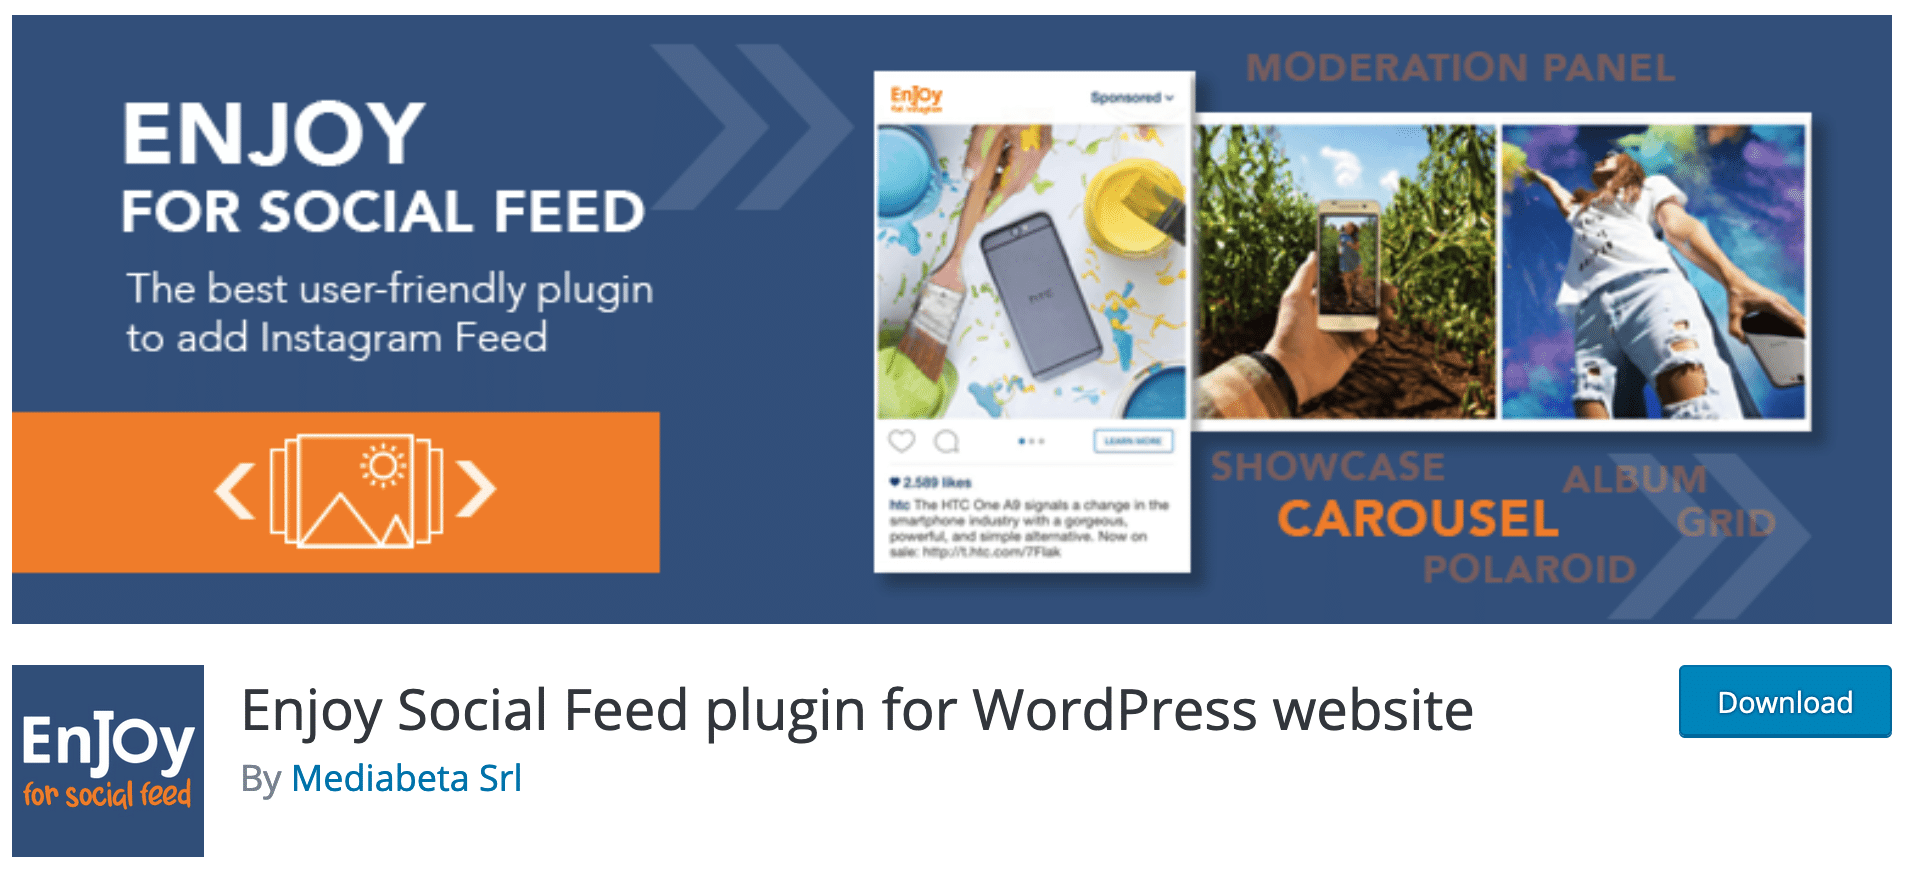 Enjoy Social Feed plugin on WordPress repository.